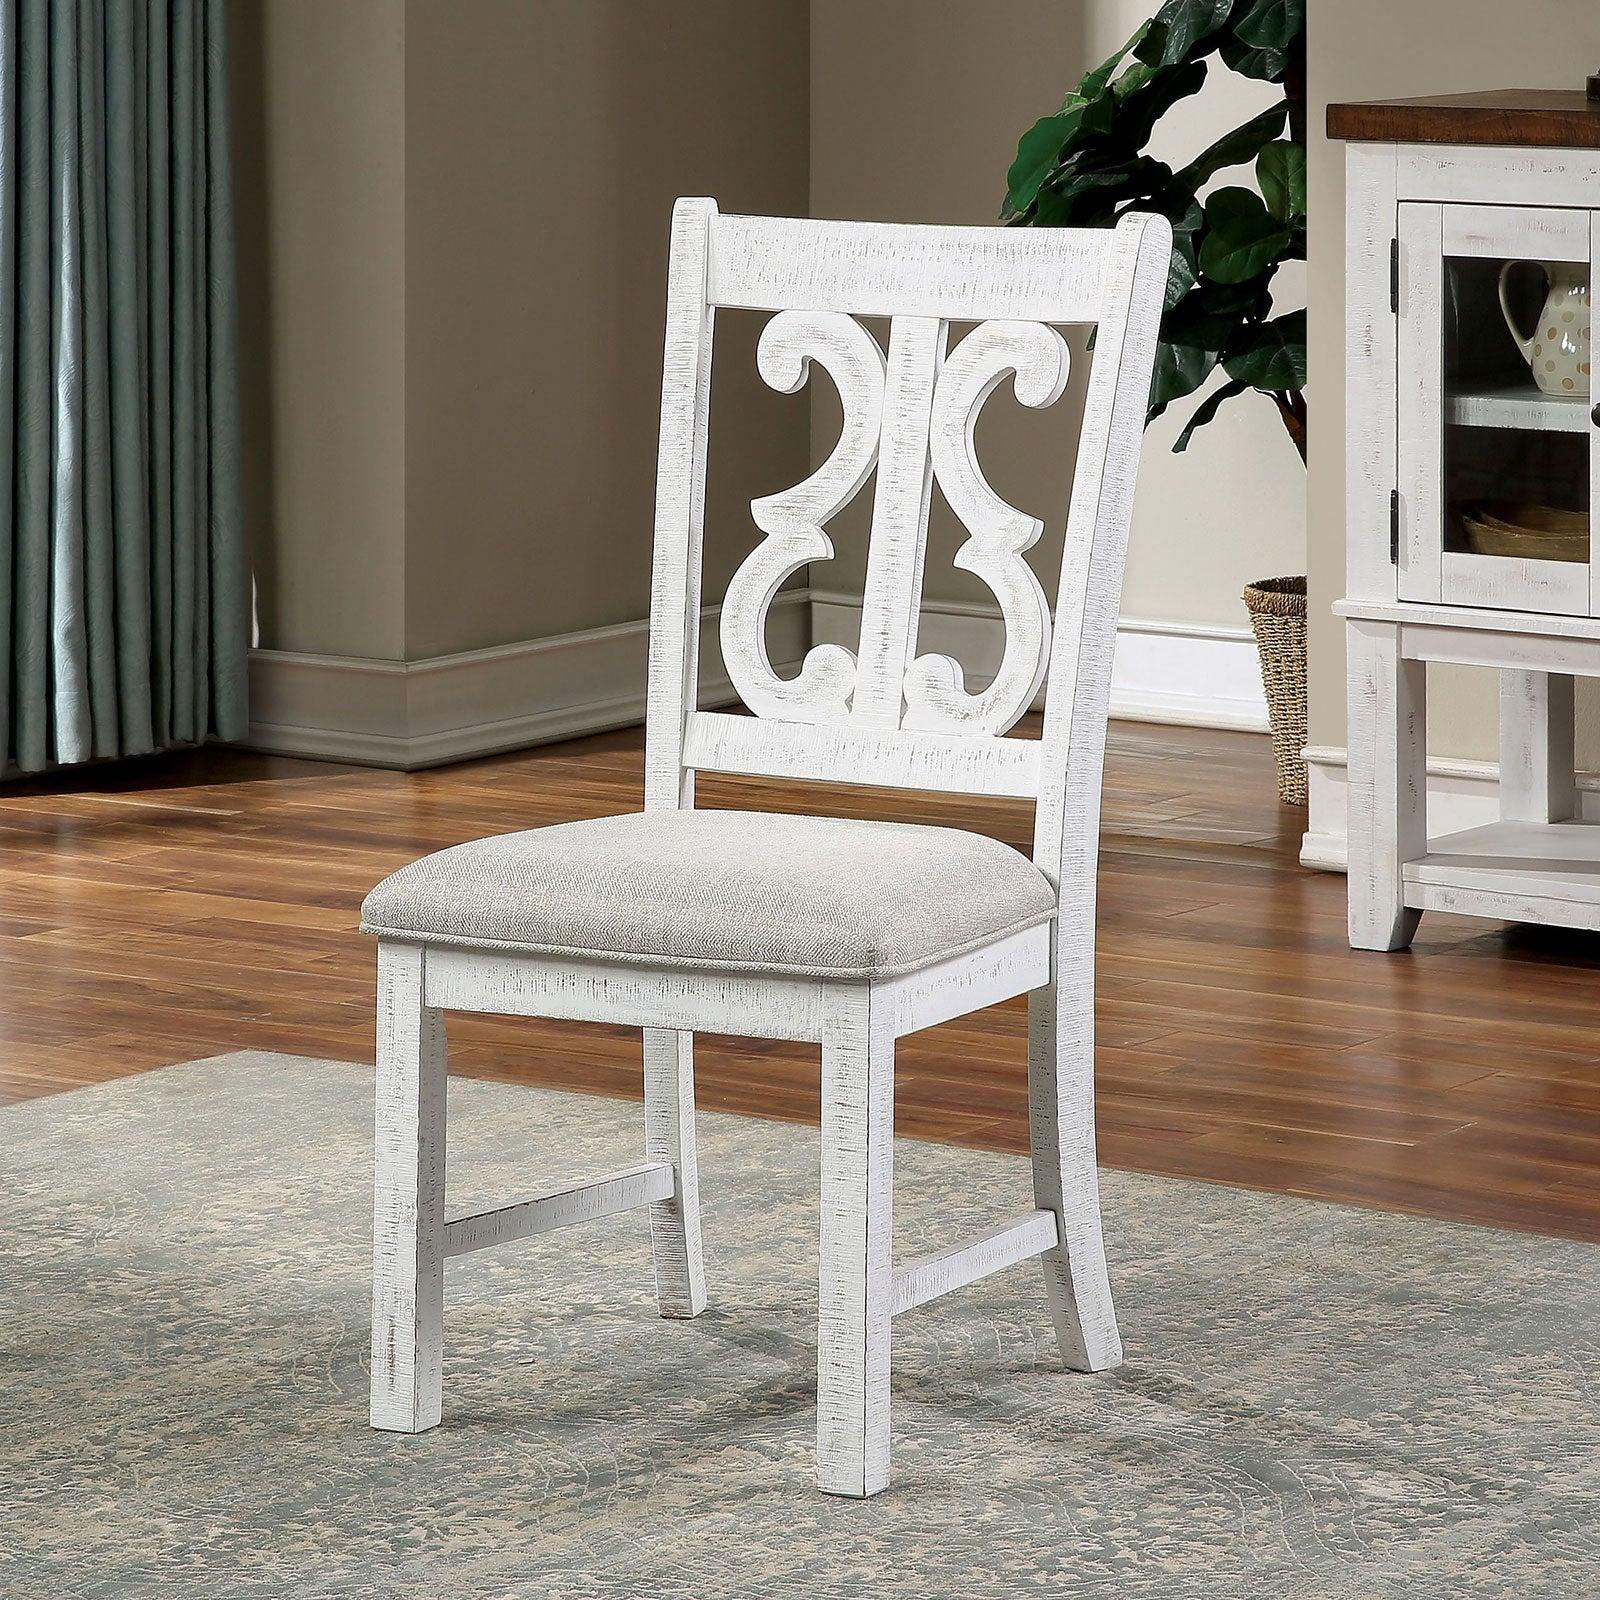 Rustic Dining Side Chair CM3417SC-2PK Auletta CM3417SC-2PK in White, Gray Fabric